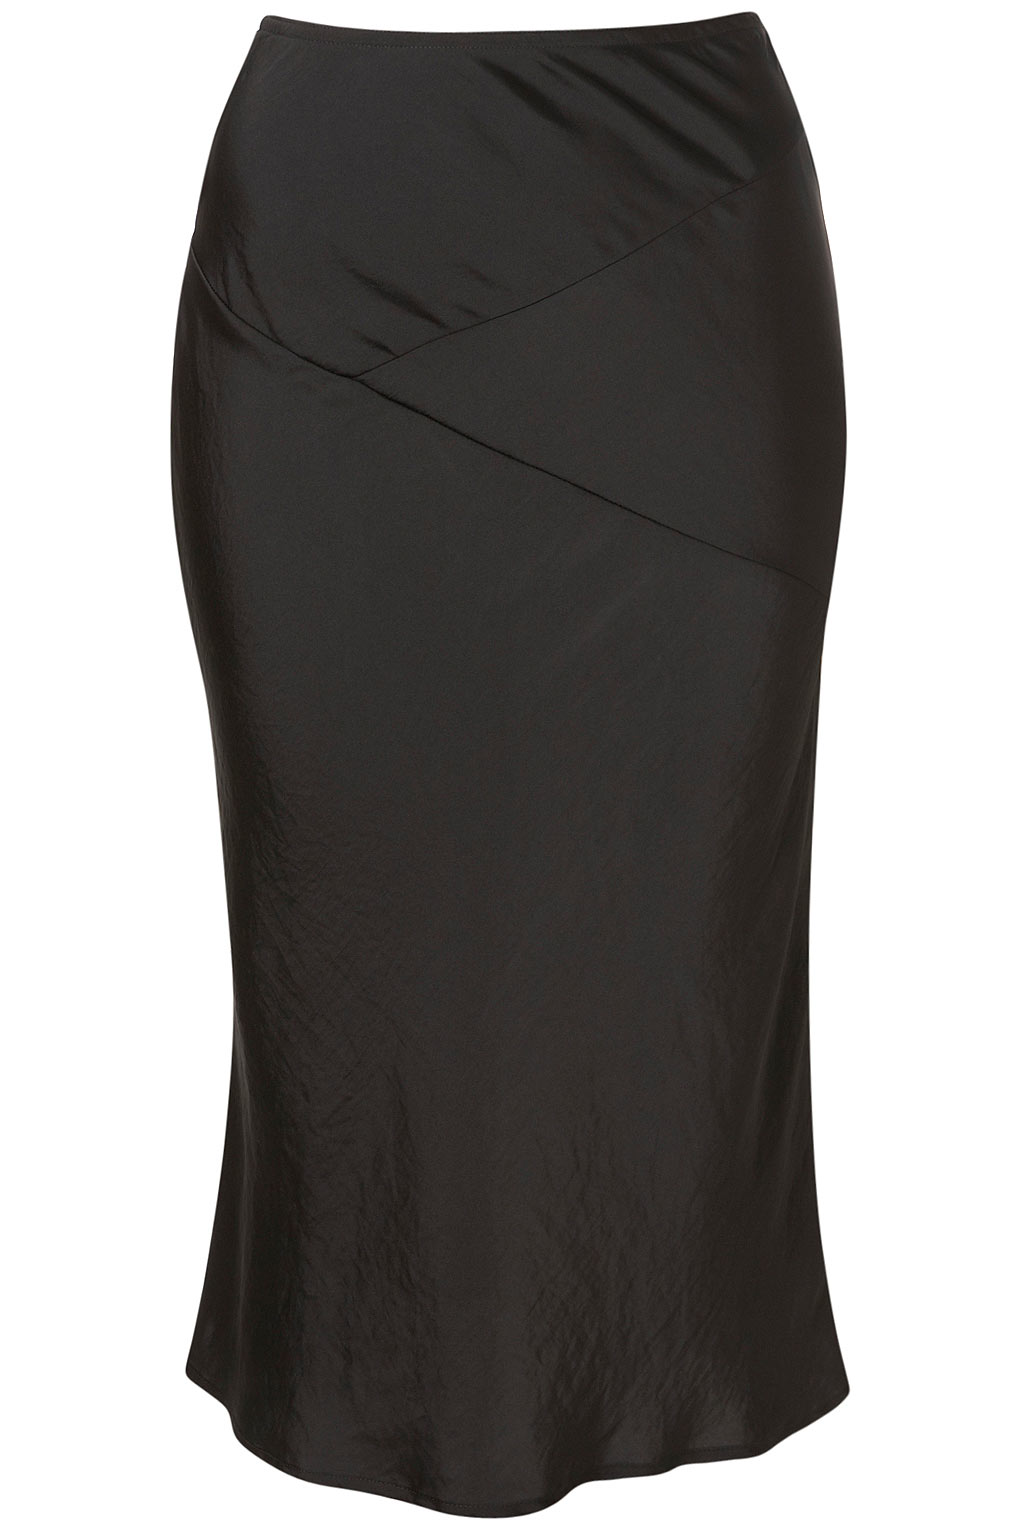 TOPSHOP Bias Cut Midi Skirt in Black - Lyst